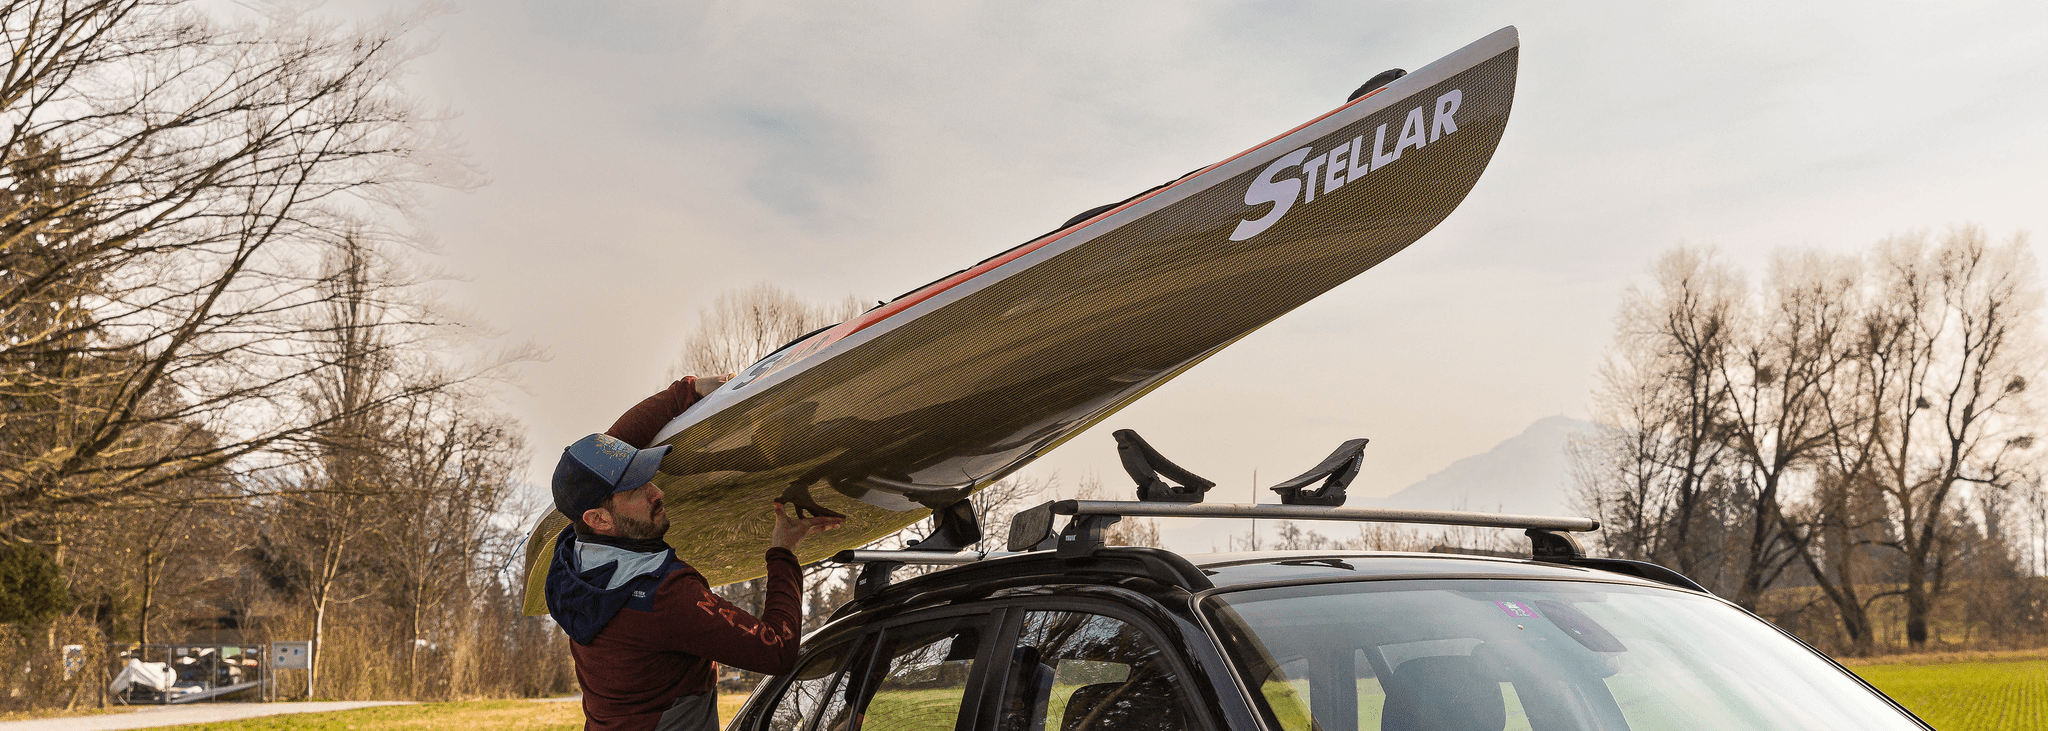 Stellar Kajak Touring S14 G2 Slideshow 02